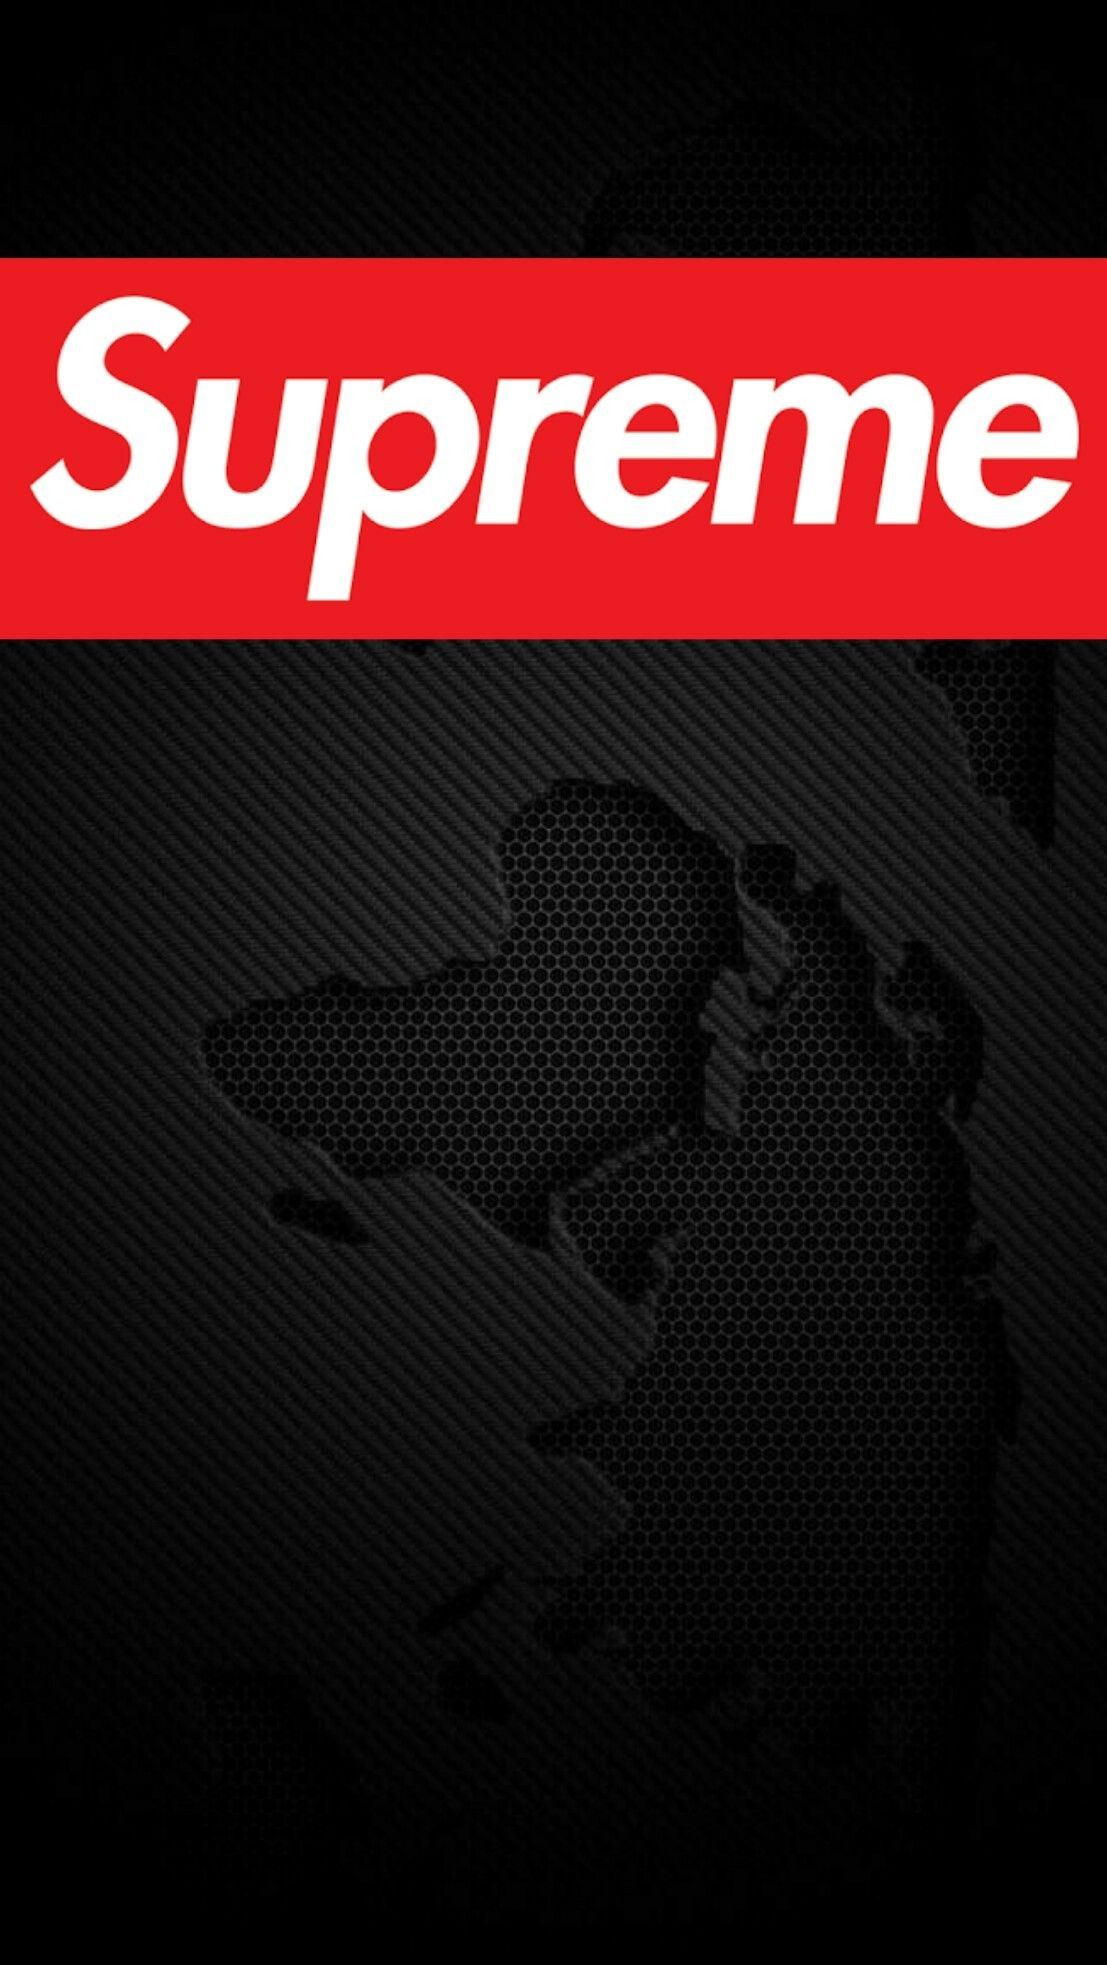 Supreme Wallpaper For iPhone Download Supreme 4k